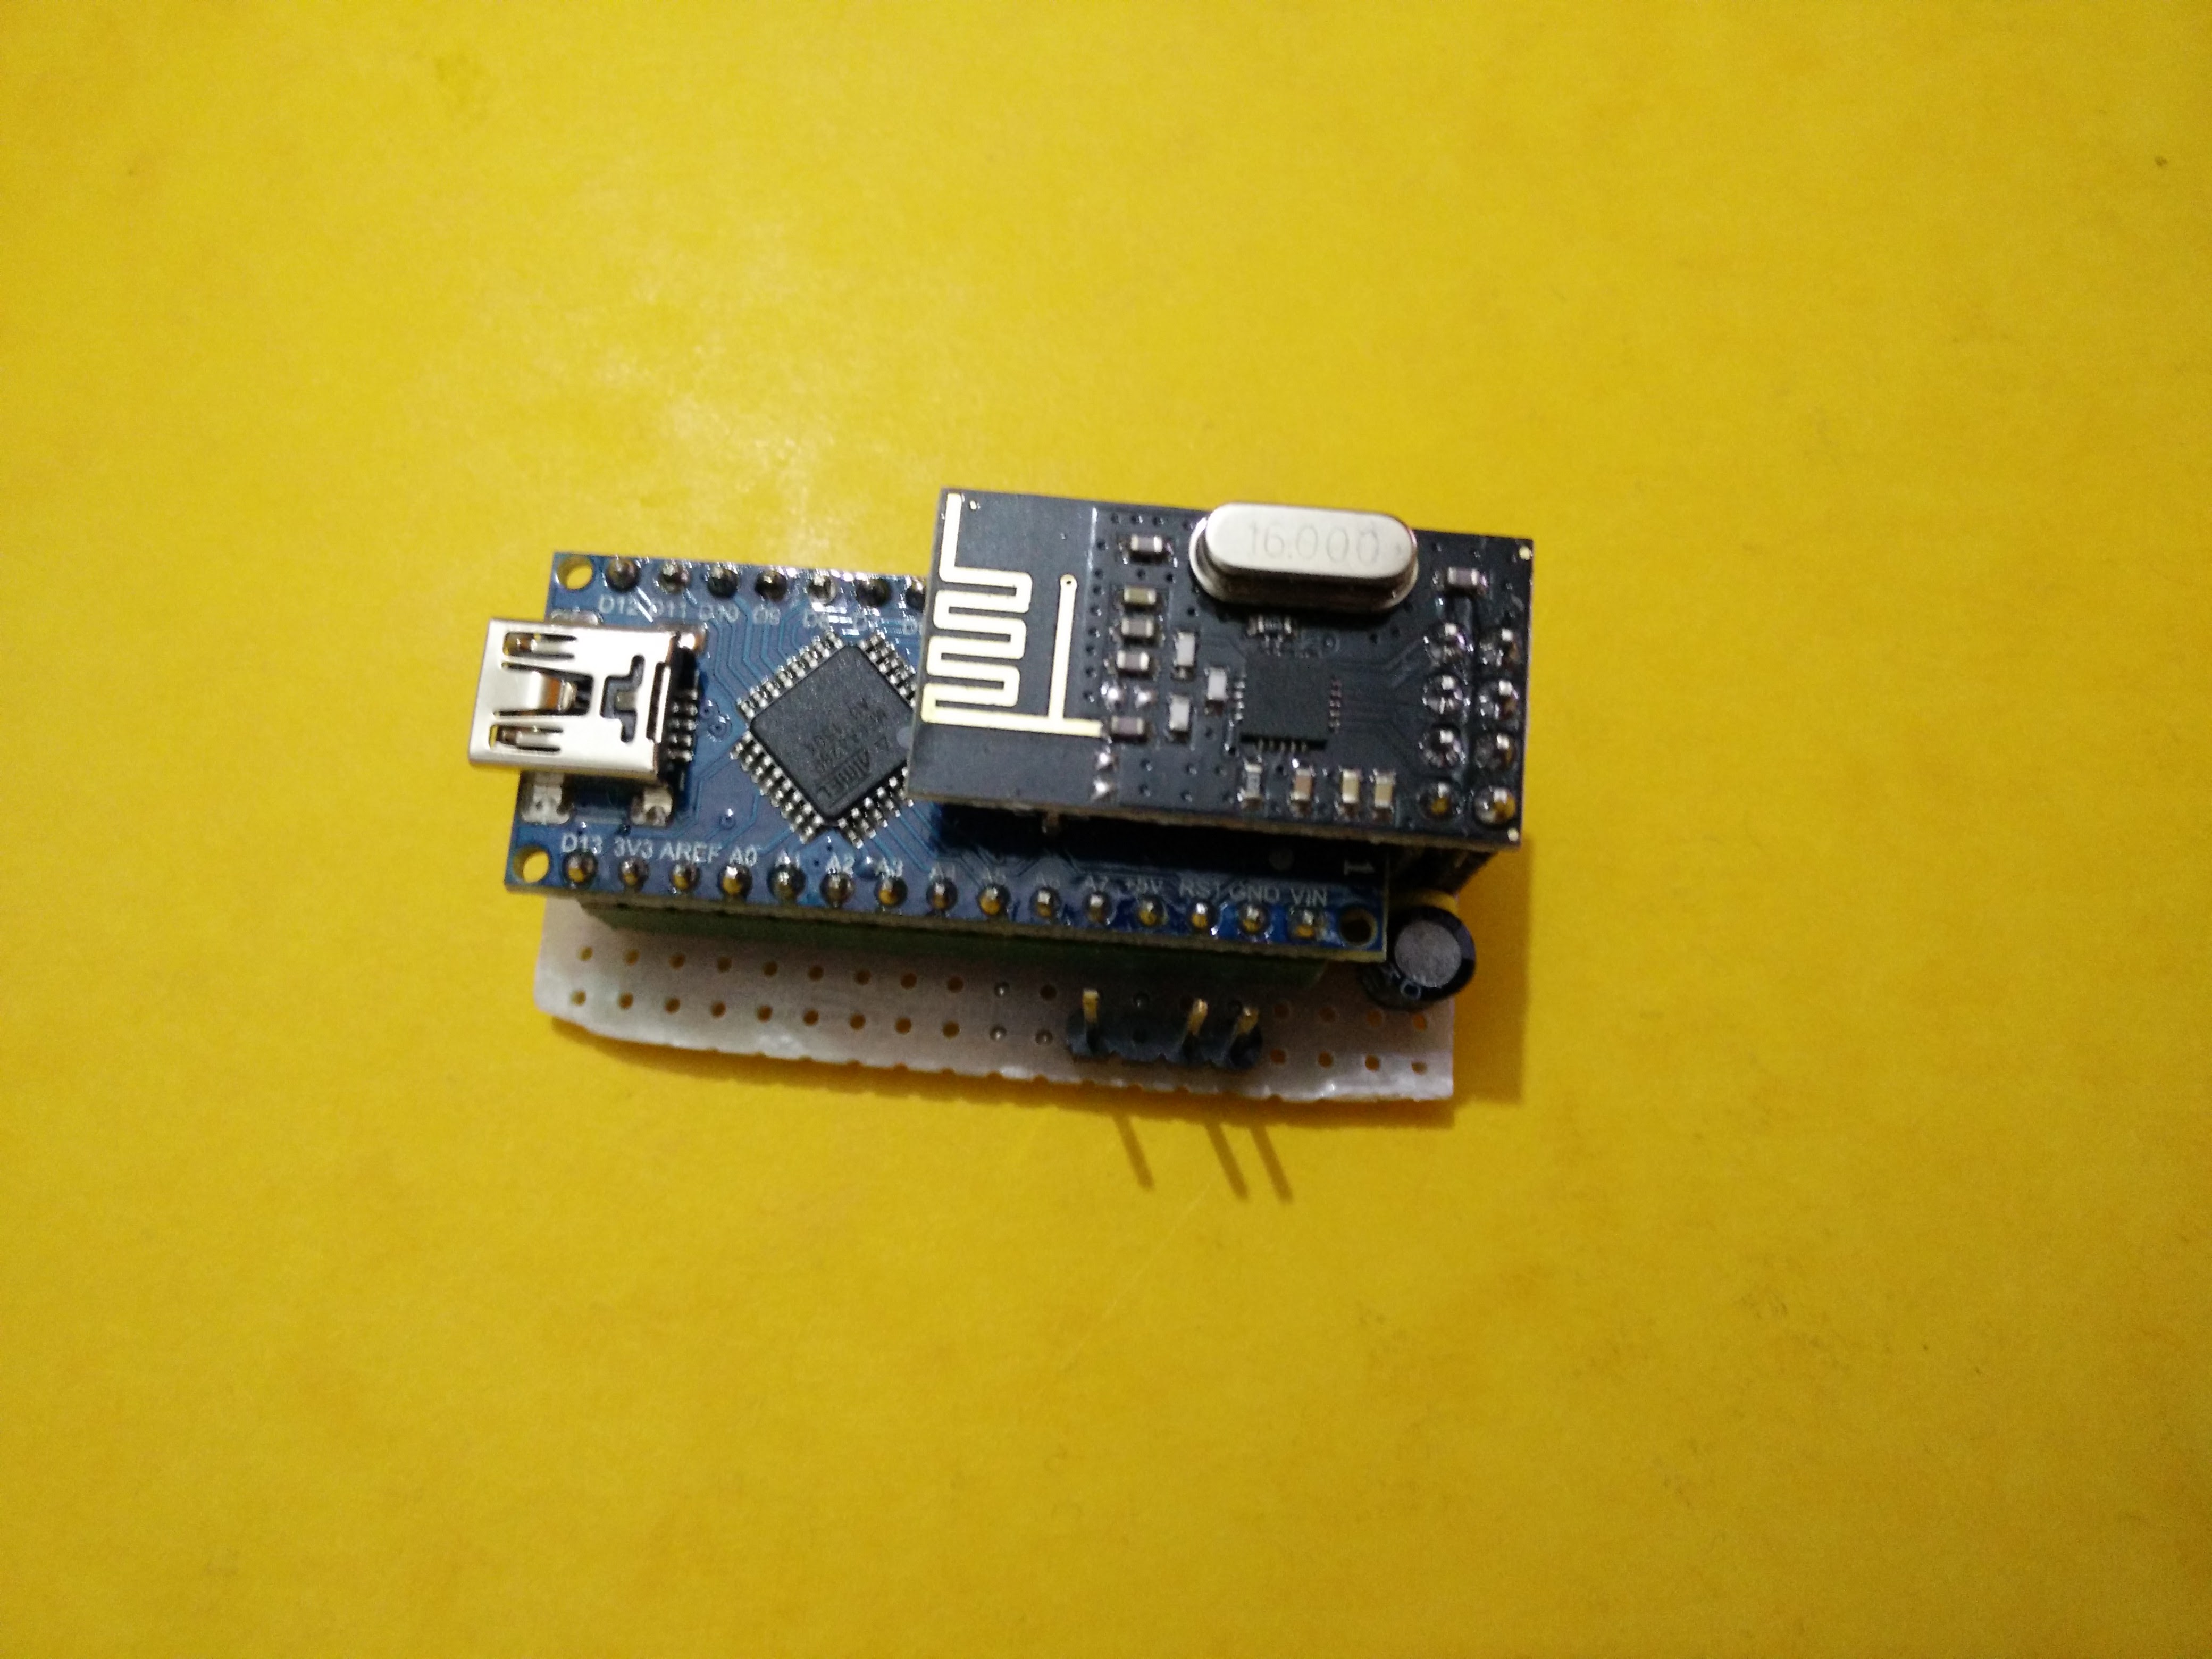 Arduino pro mini pin types - Microcontrollers - Arduino Forum